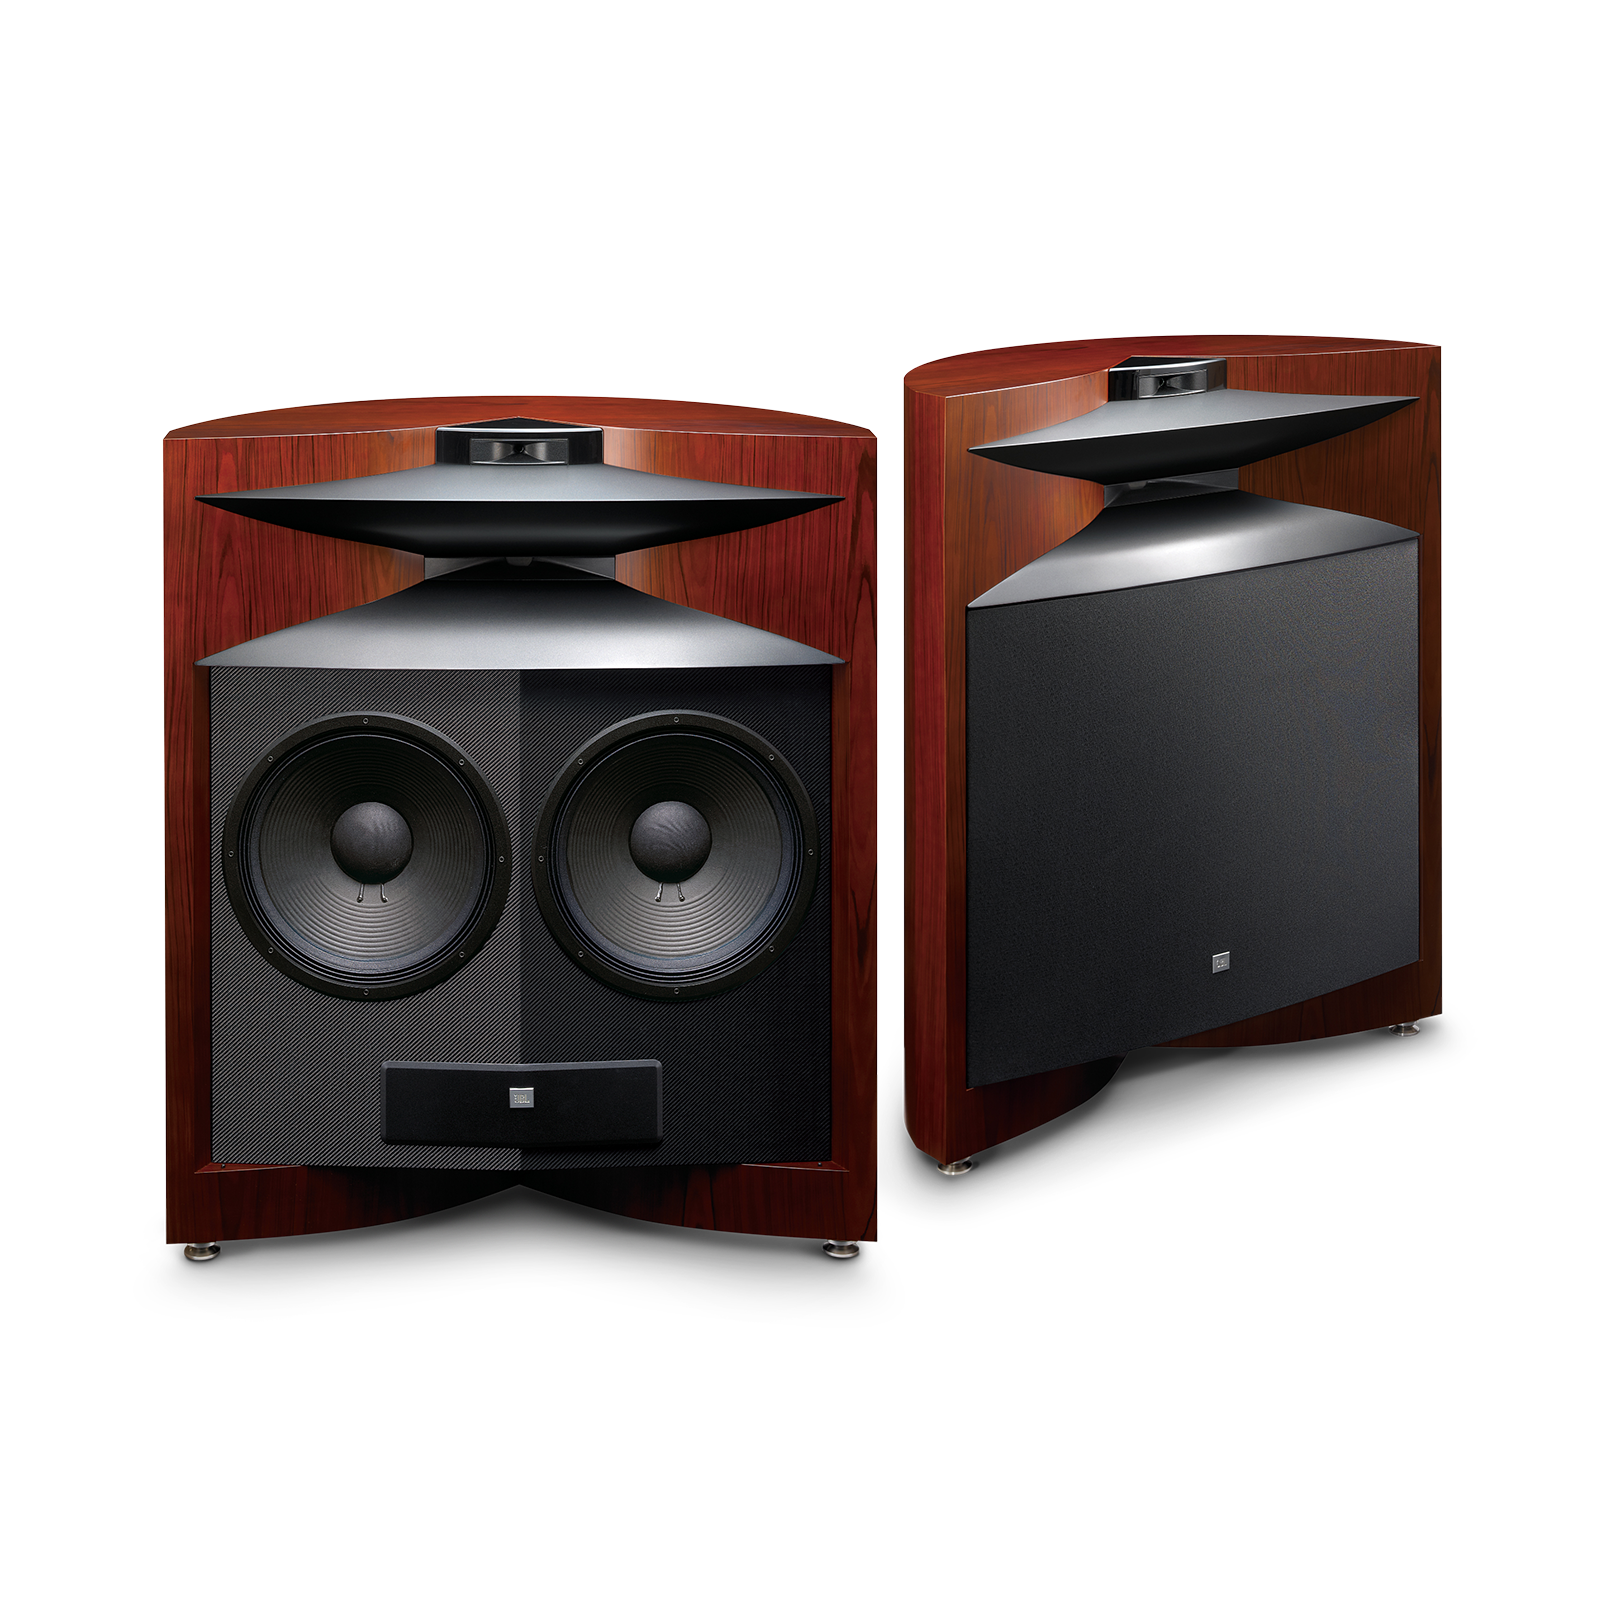 Project Everest DD67000 | Dual 15″ (380mm), three-way, floorstanding speaker designed for superlative listening experience